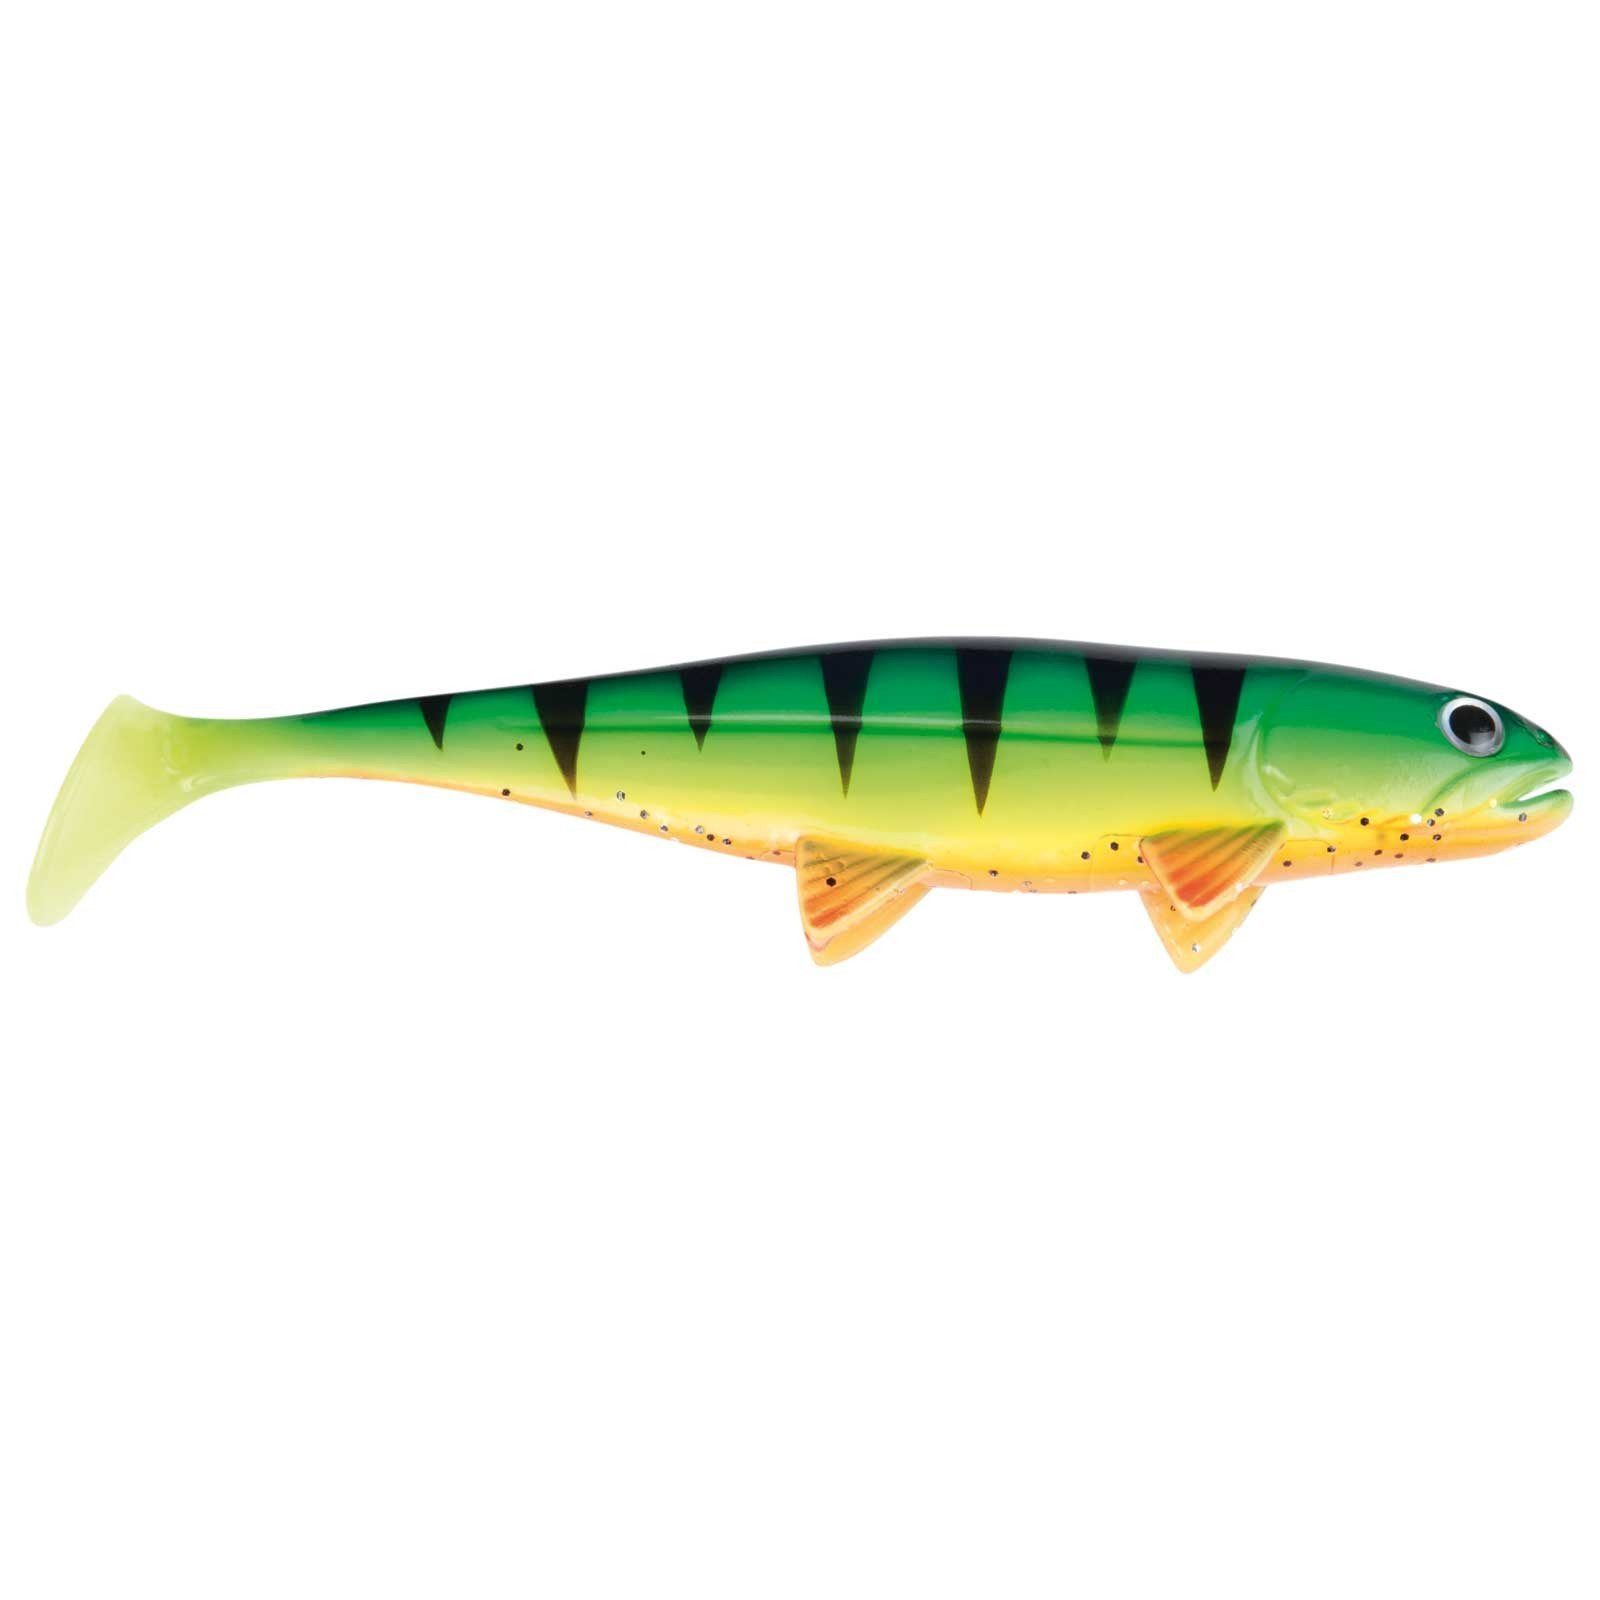 Fish The Gummifisch 23cm Kunstköder, Jackson Big Jackson Fishing Firetiger